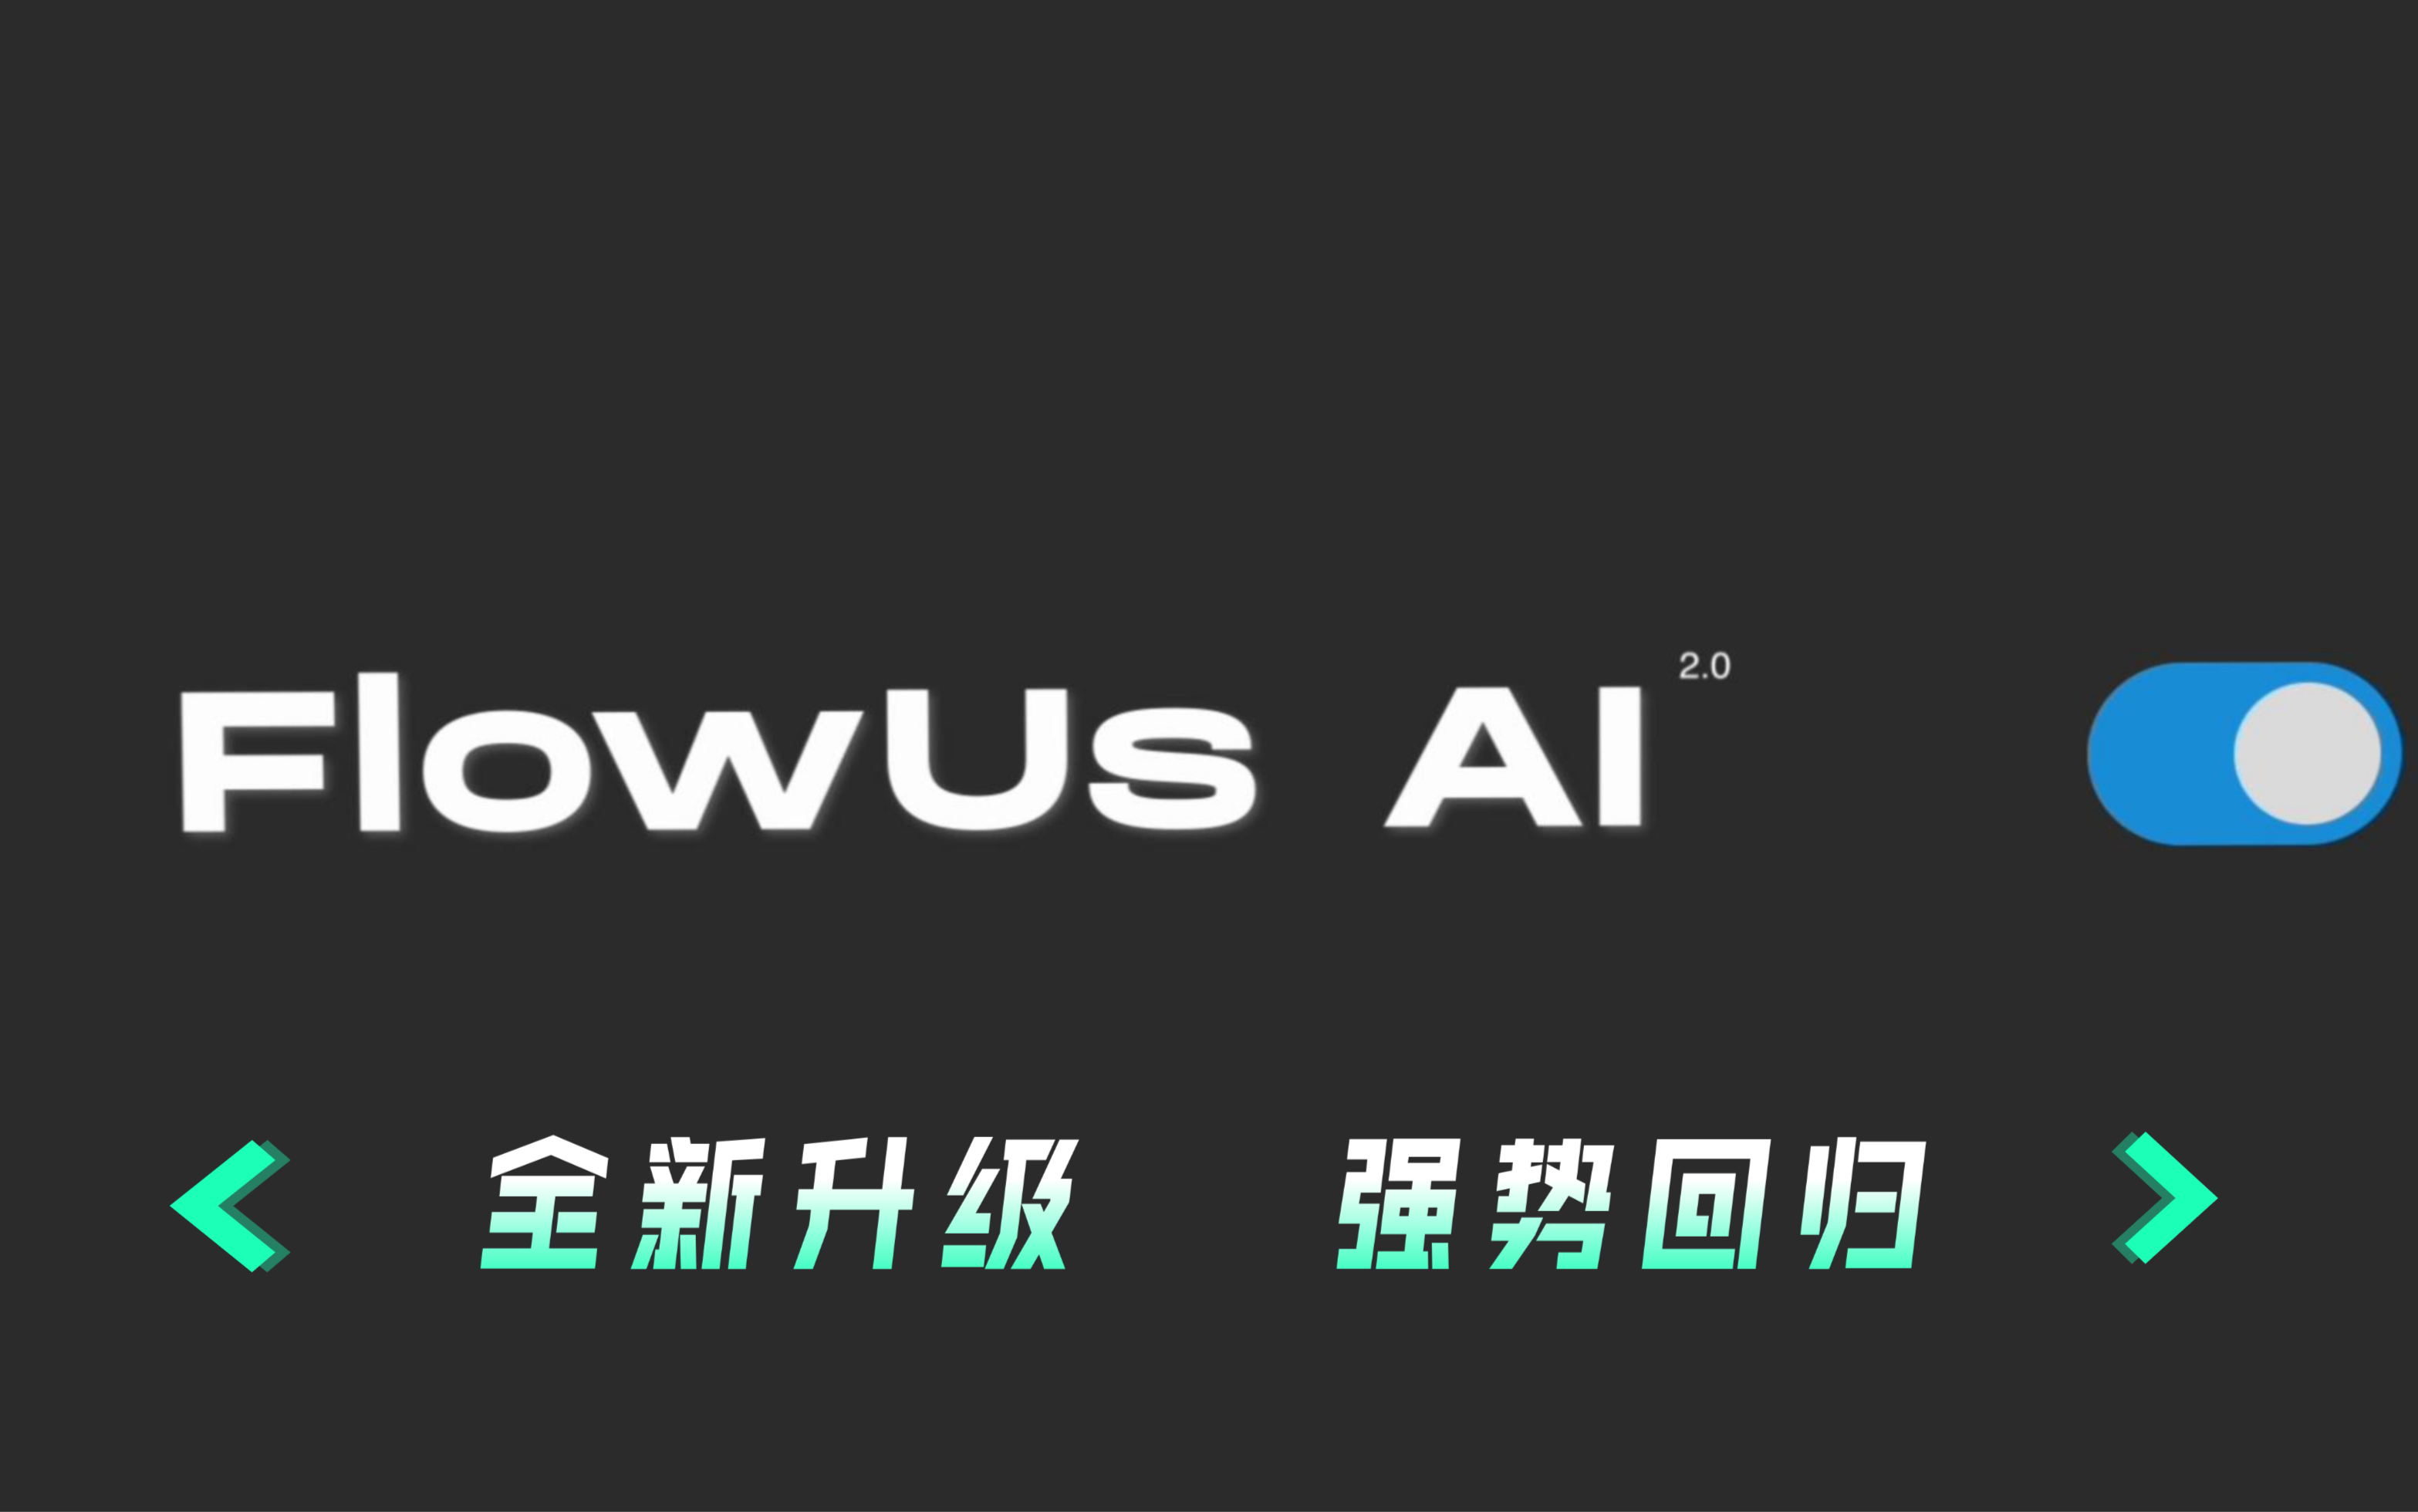 FlowUs AI 升级归来：新增智能编程、表格分析、深度文本处理、多国语言互译等能力，手机端AI功能本周更新后同步上线！立即开启AI之旅！